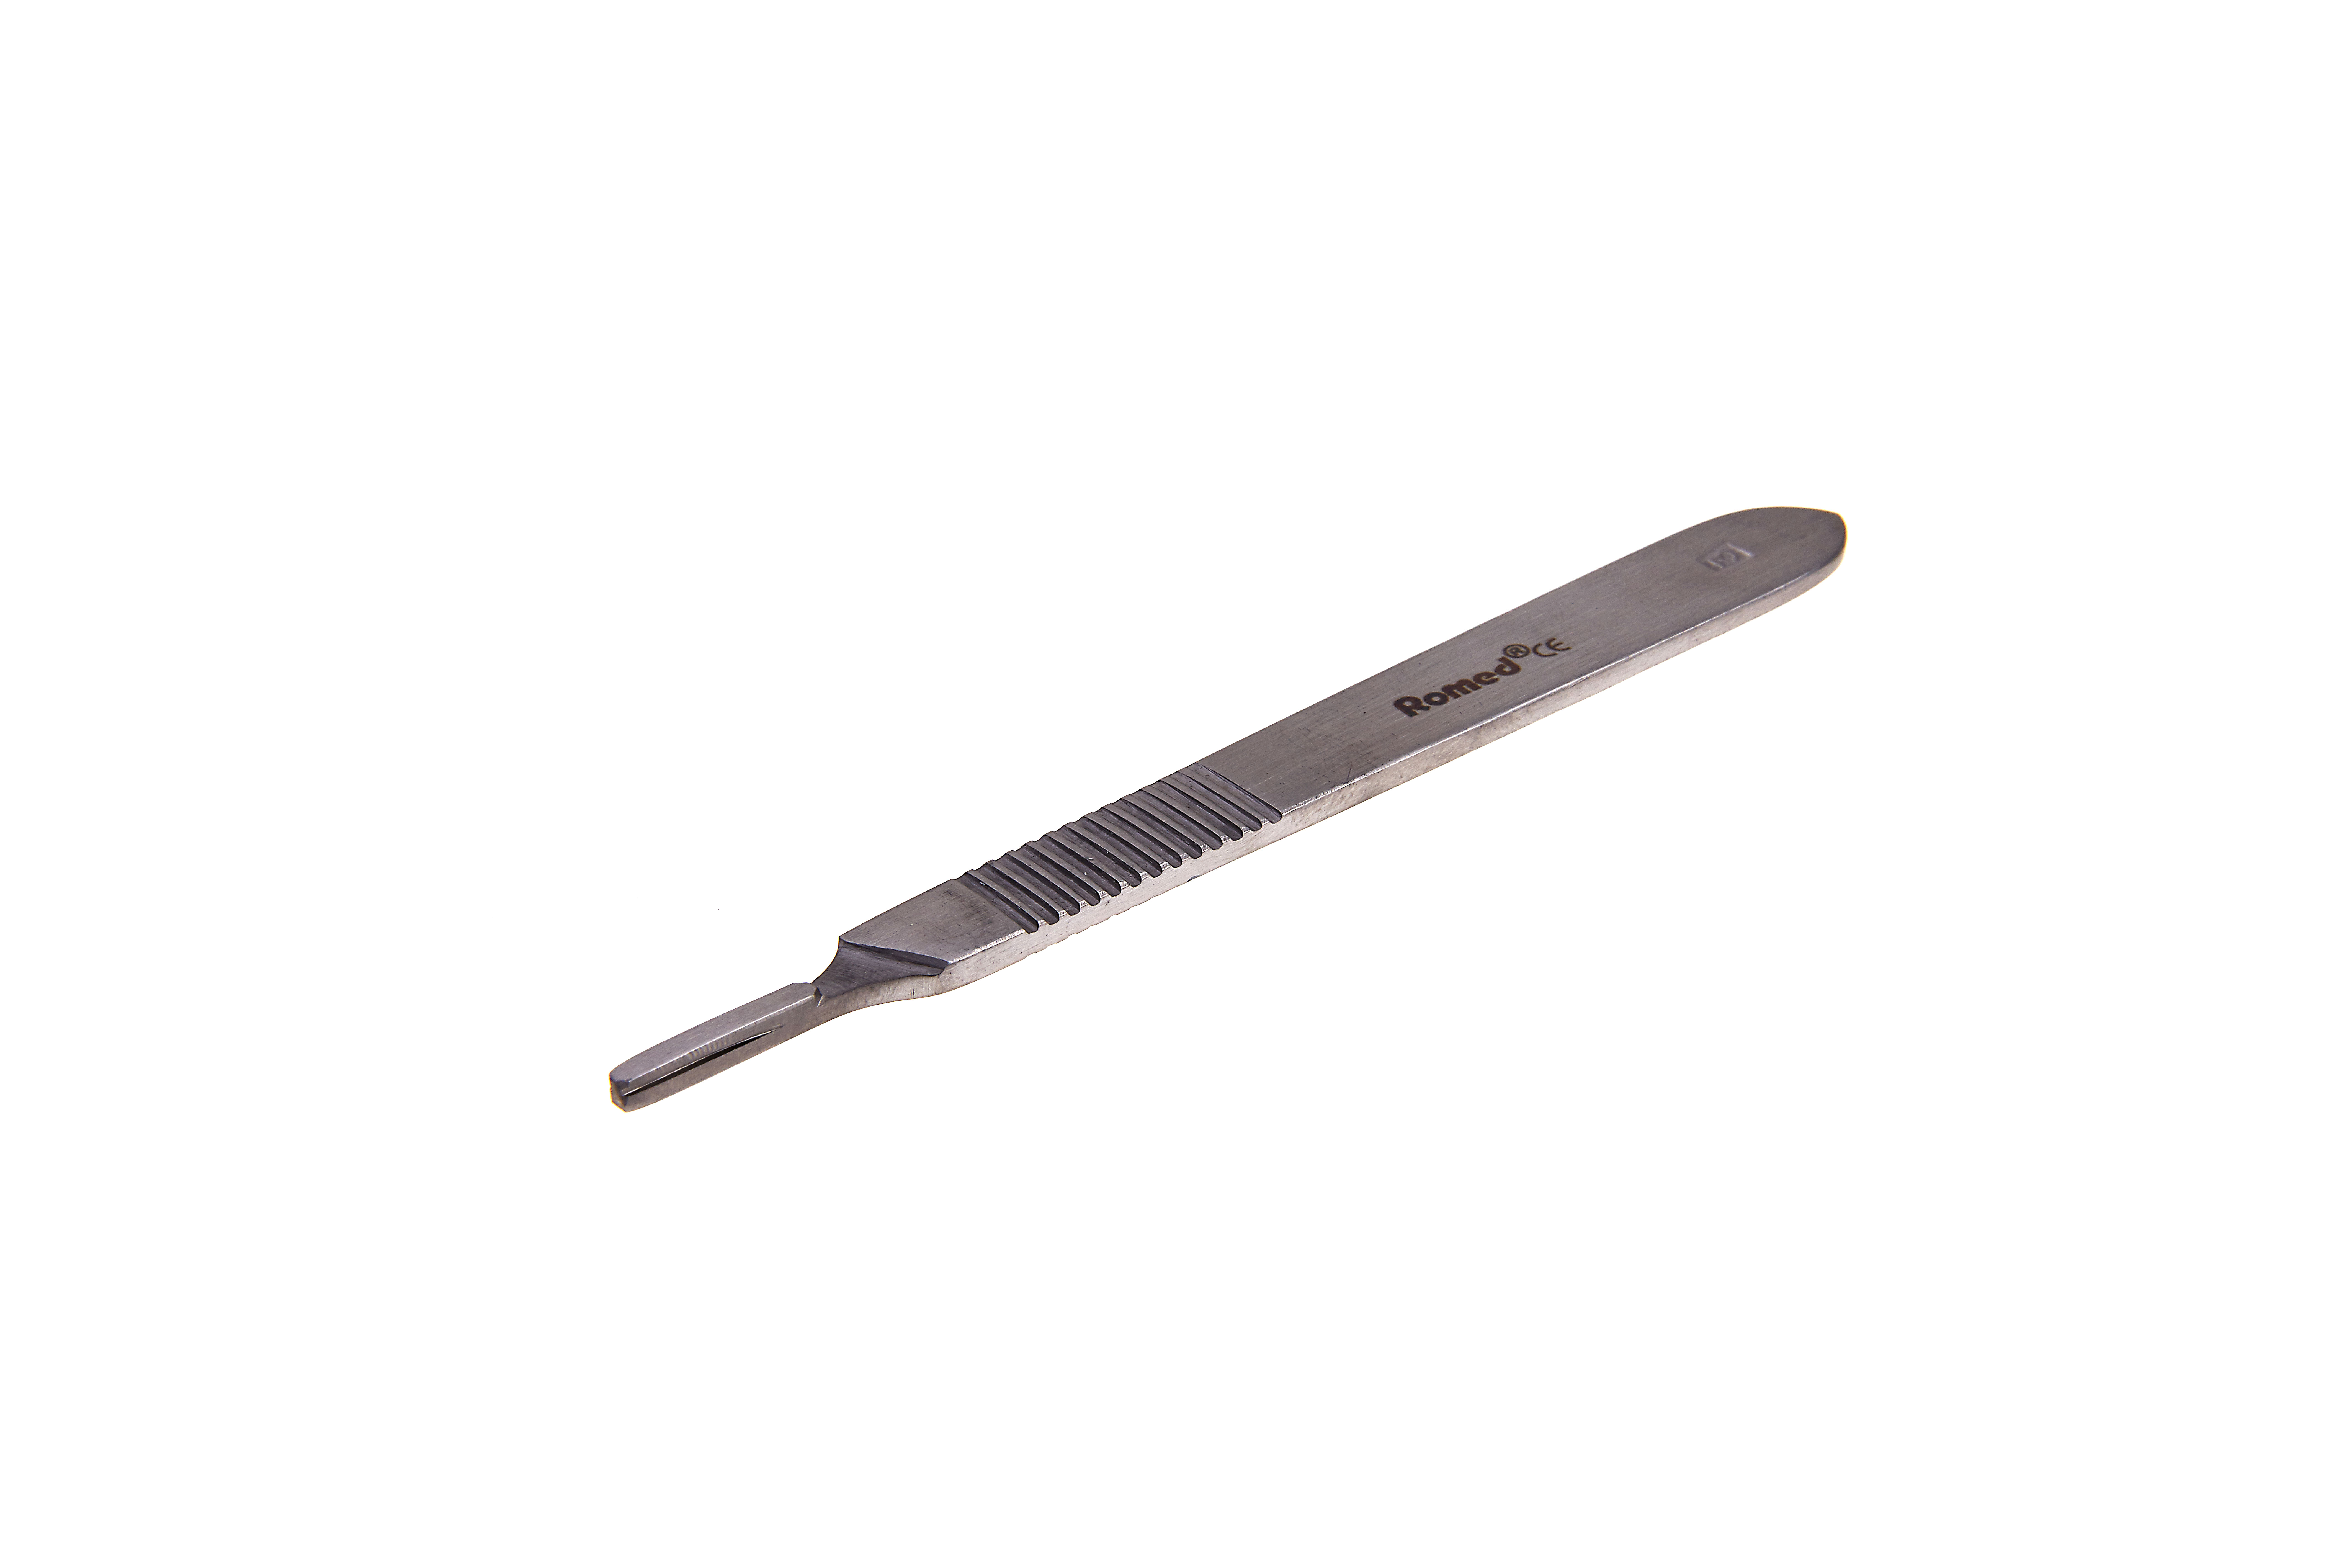 Handles for scalpel blades, non sterile